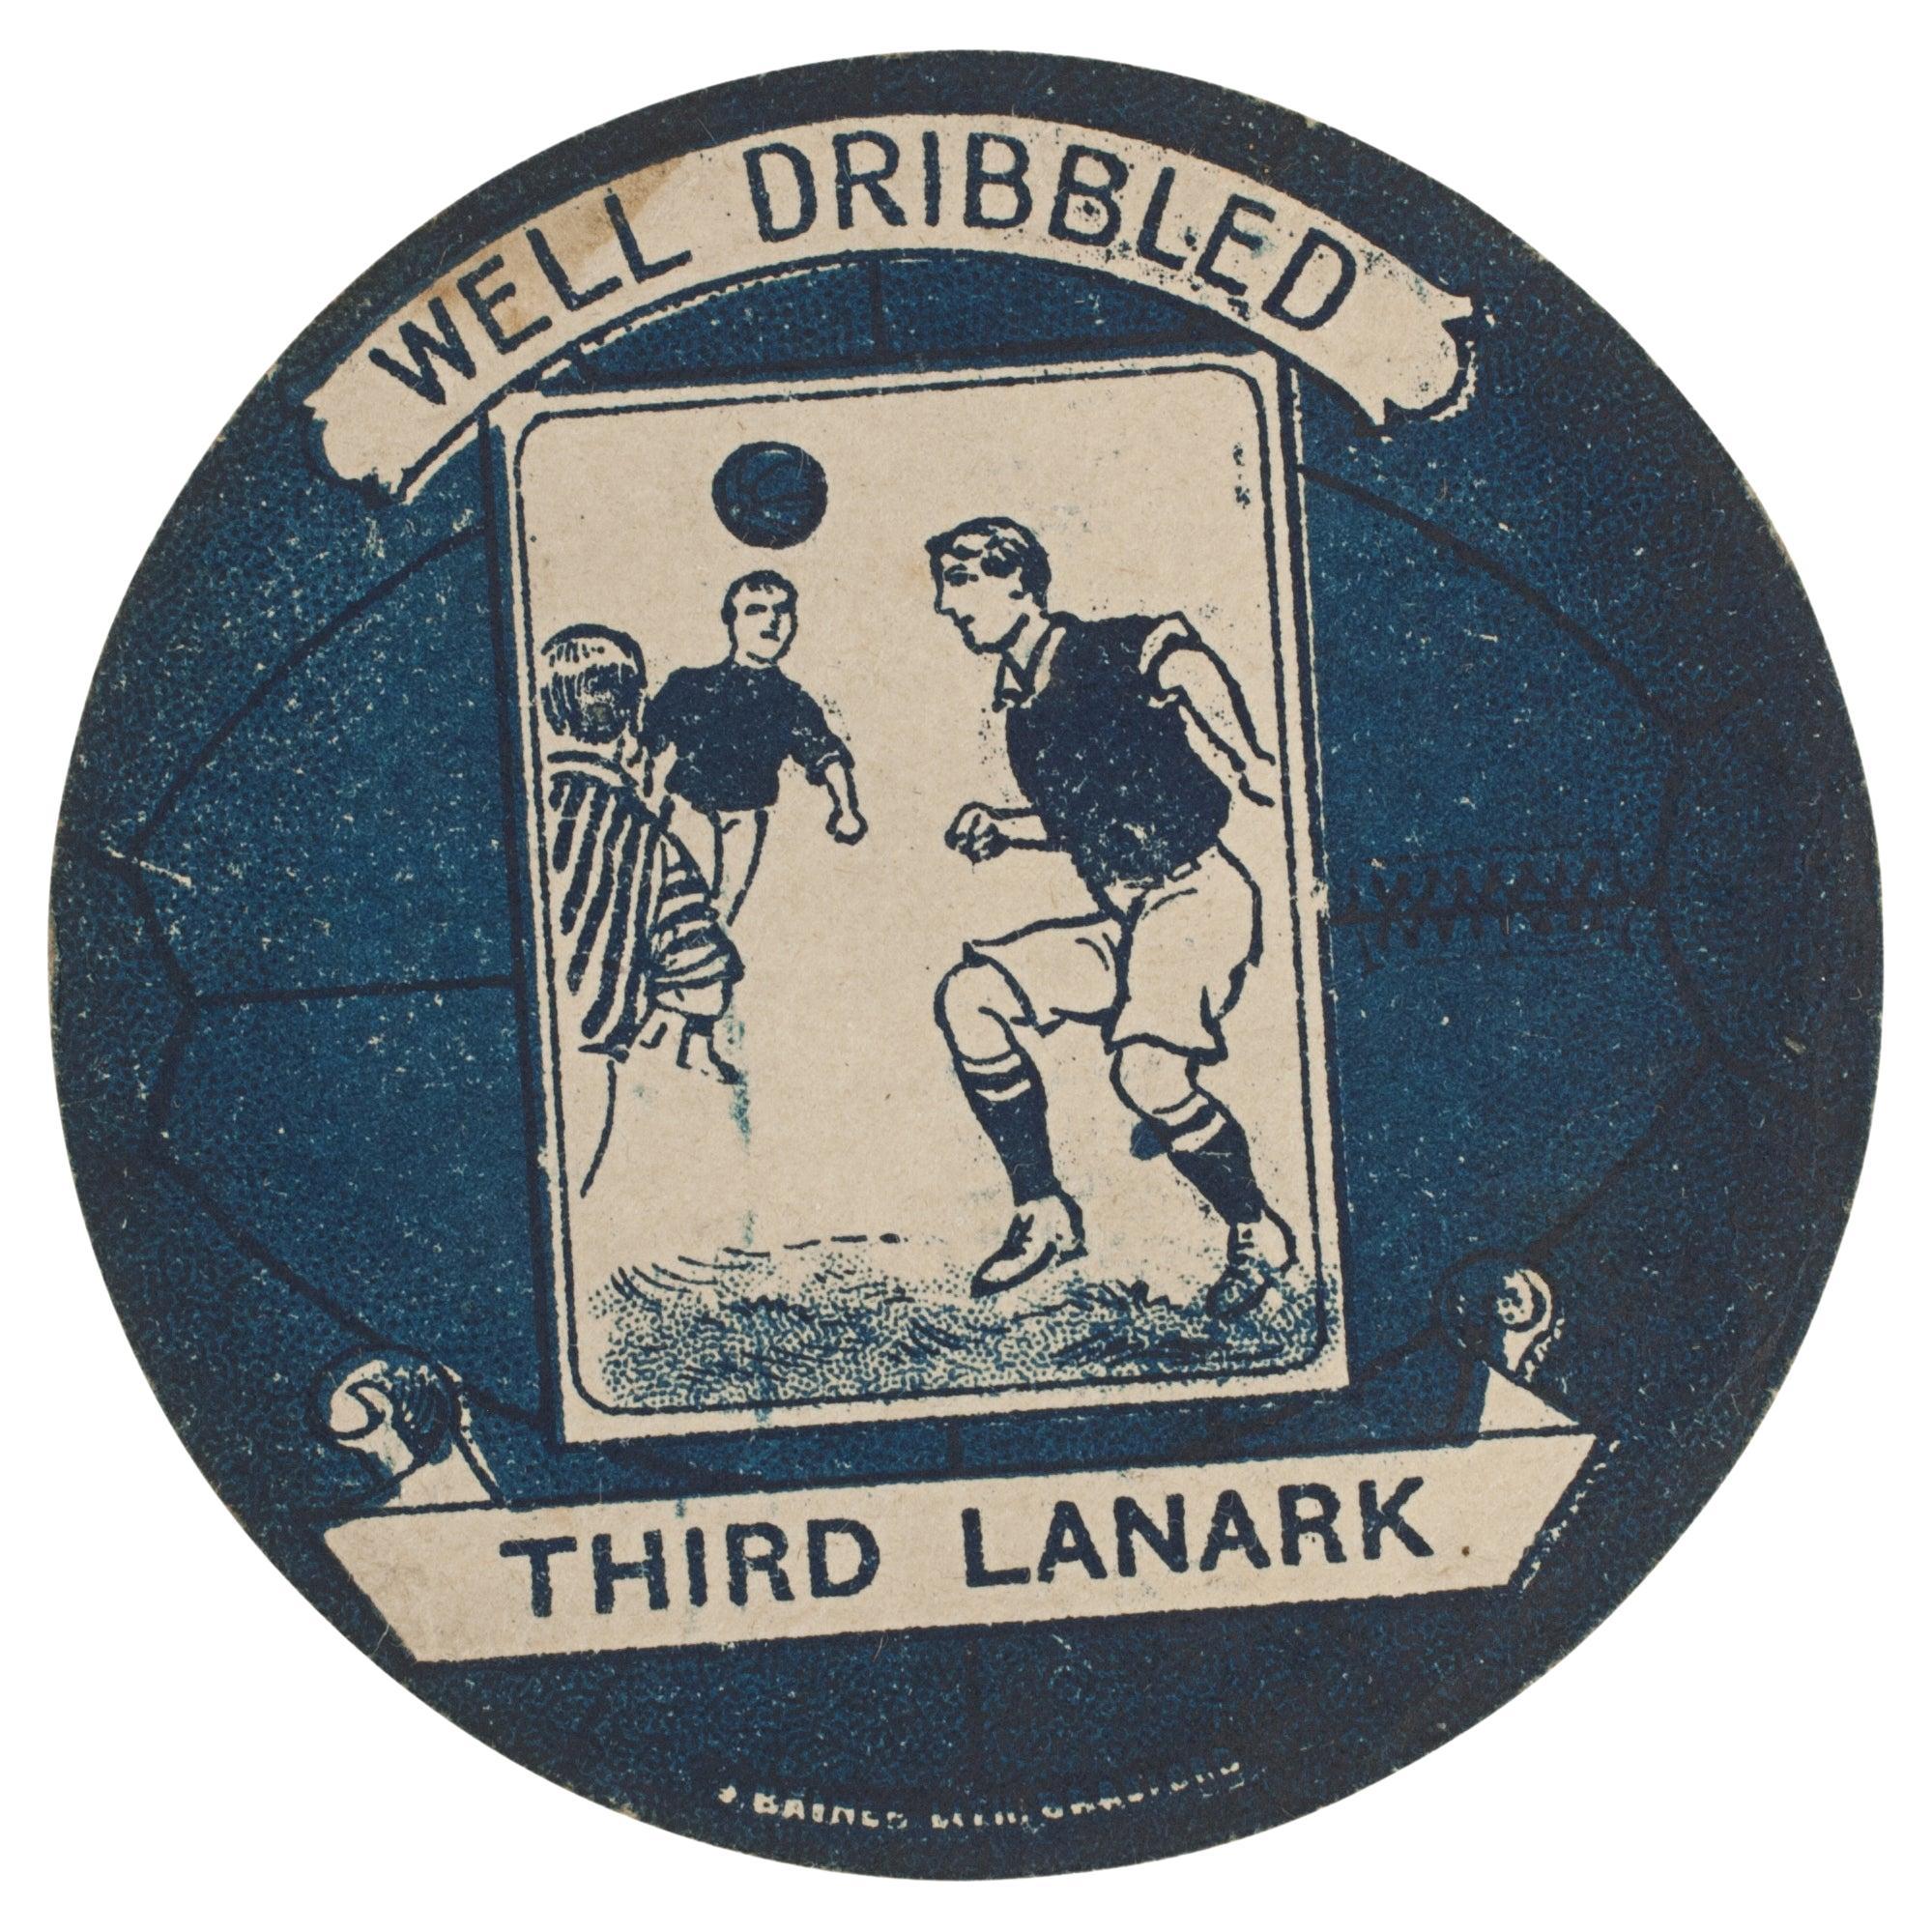  Antique Baines Football Trade Card, Third Lanark For Sale